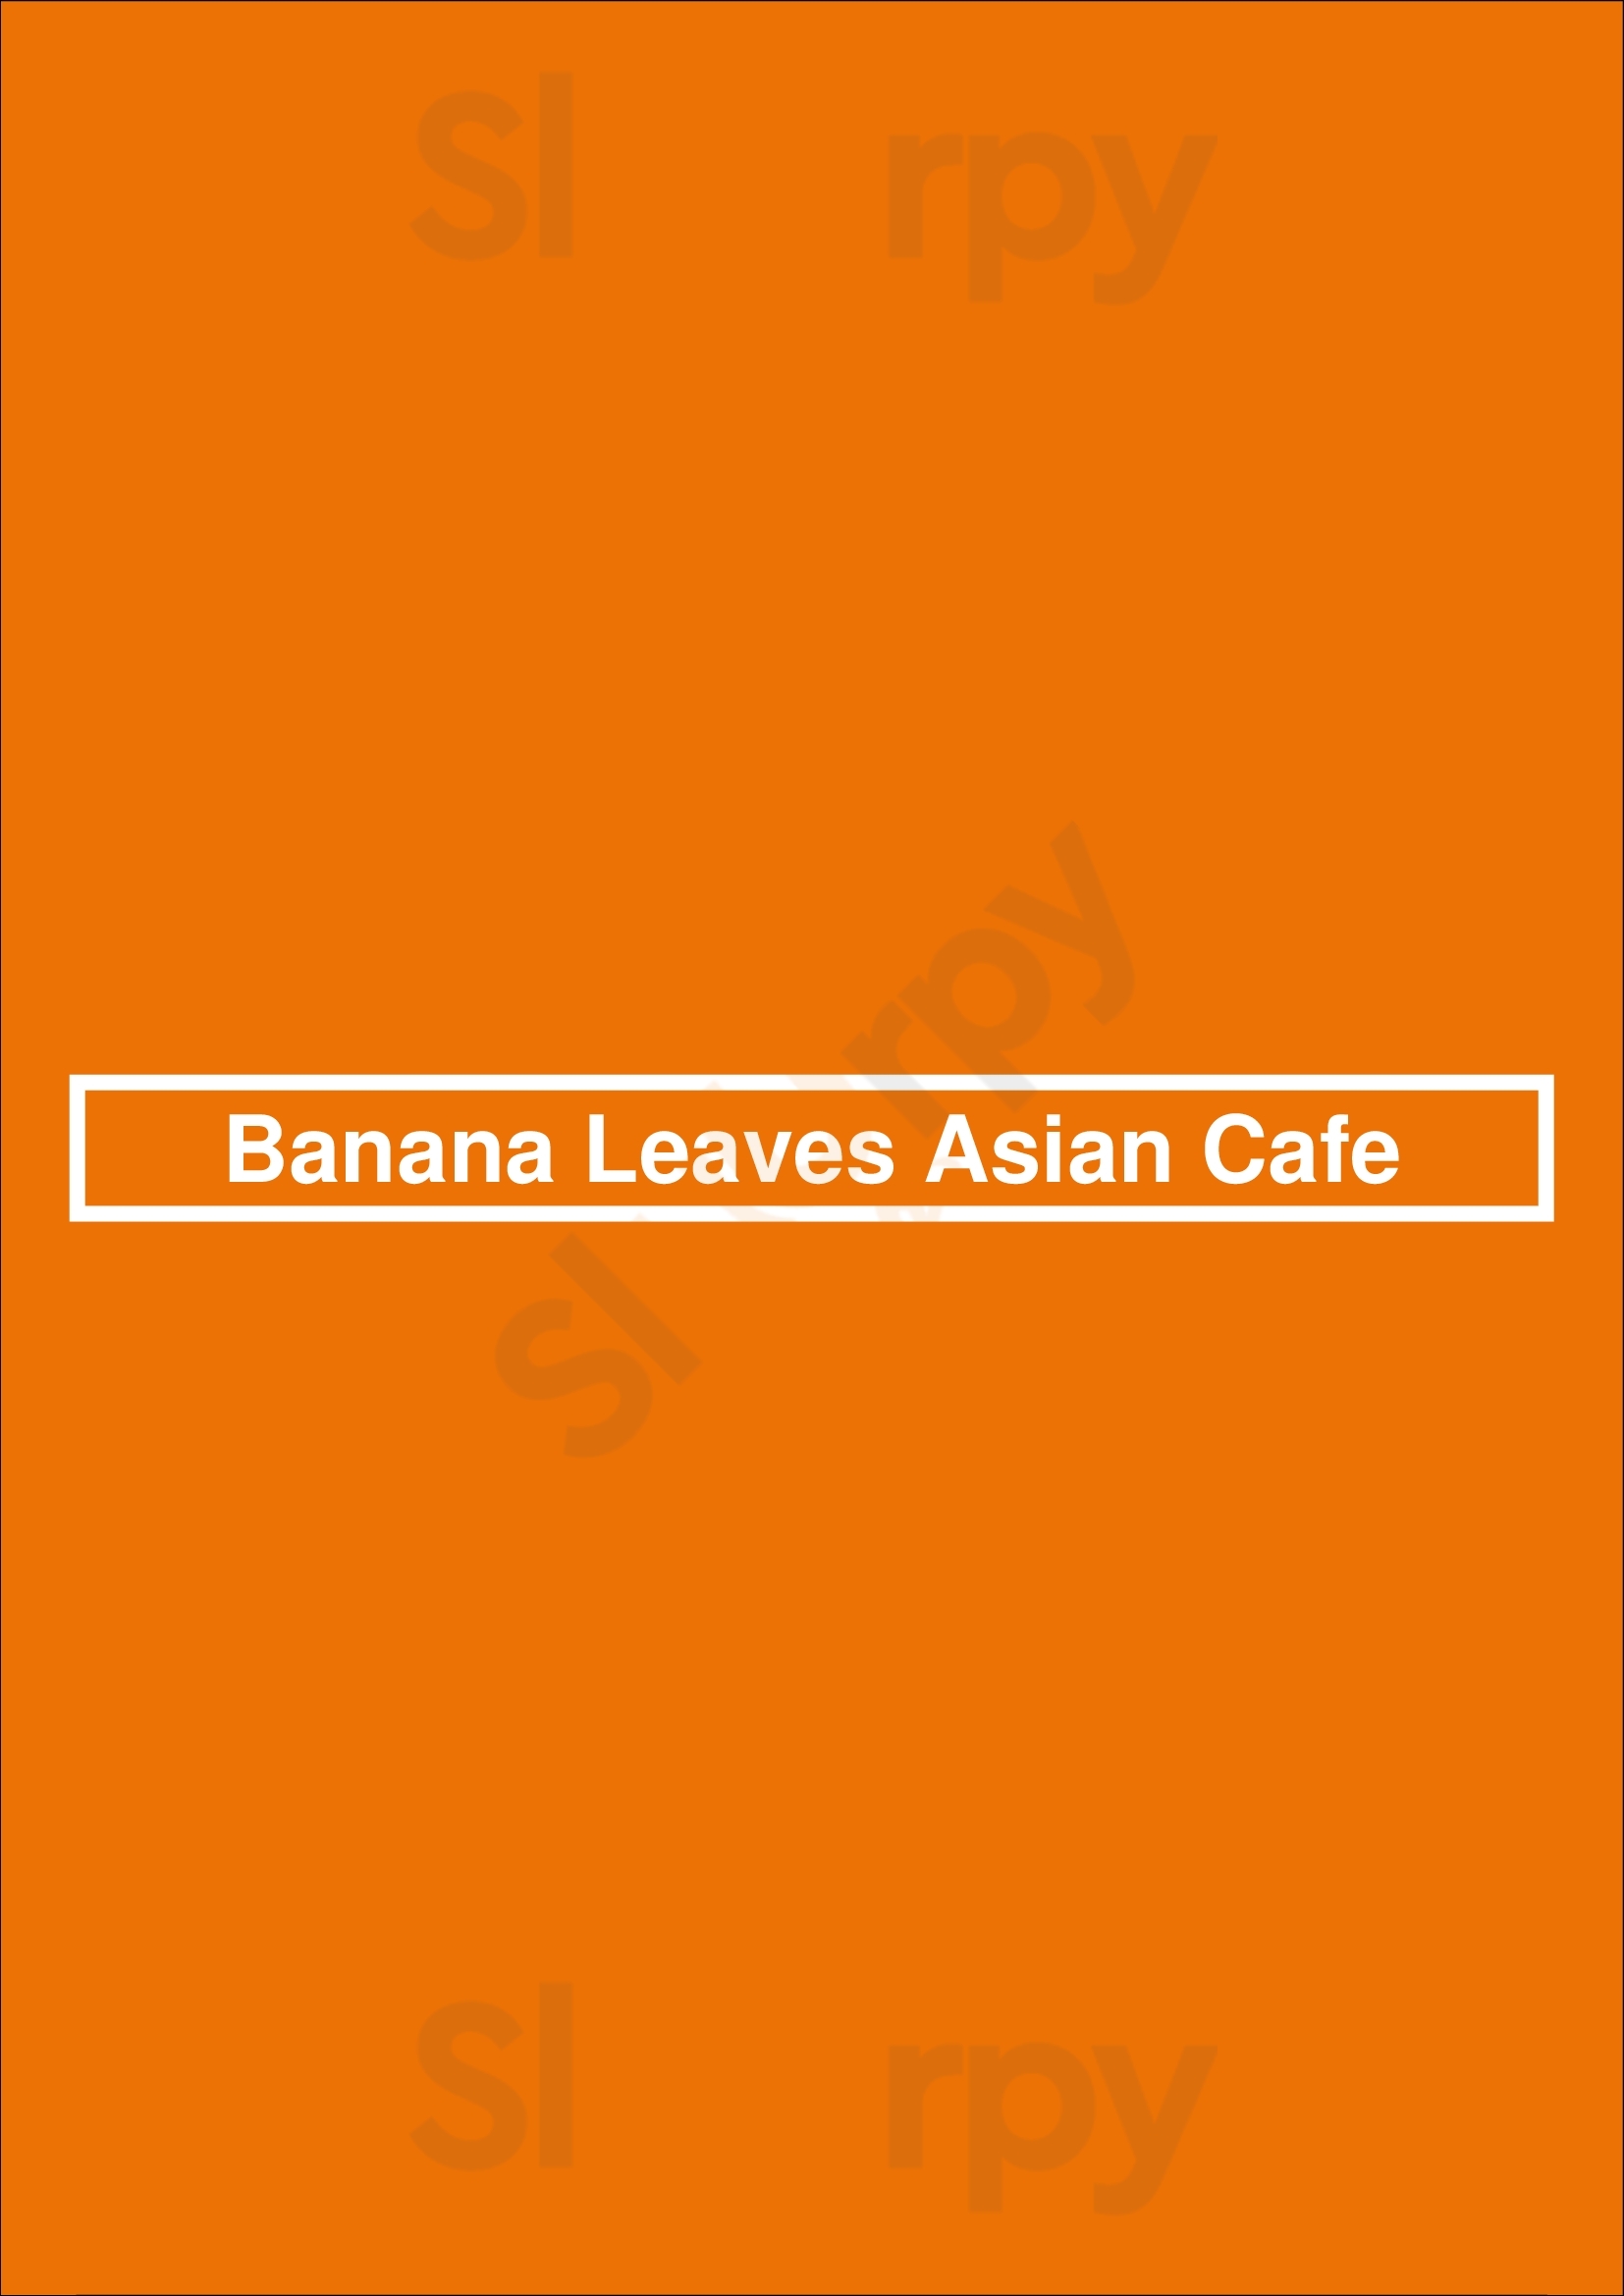 Banana Leaves Asian Cafe Rockville Menu - 1